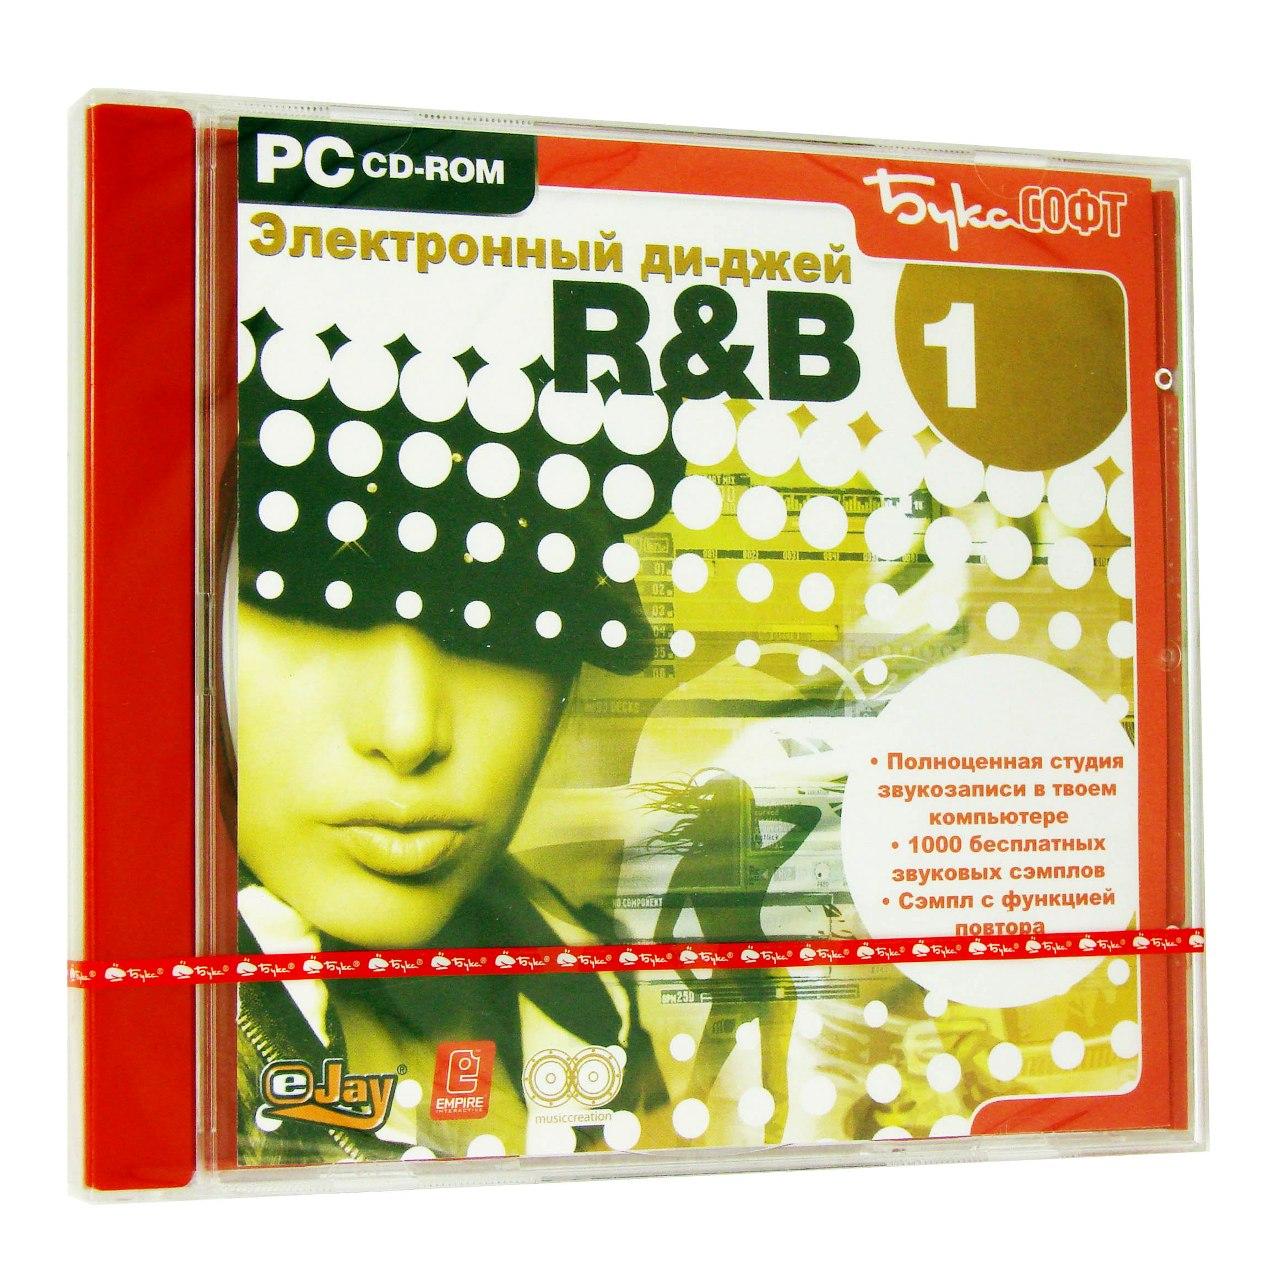  -  - R&B 1 (PC),  "", 1CD